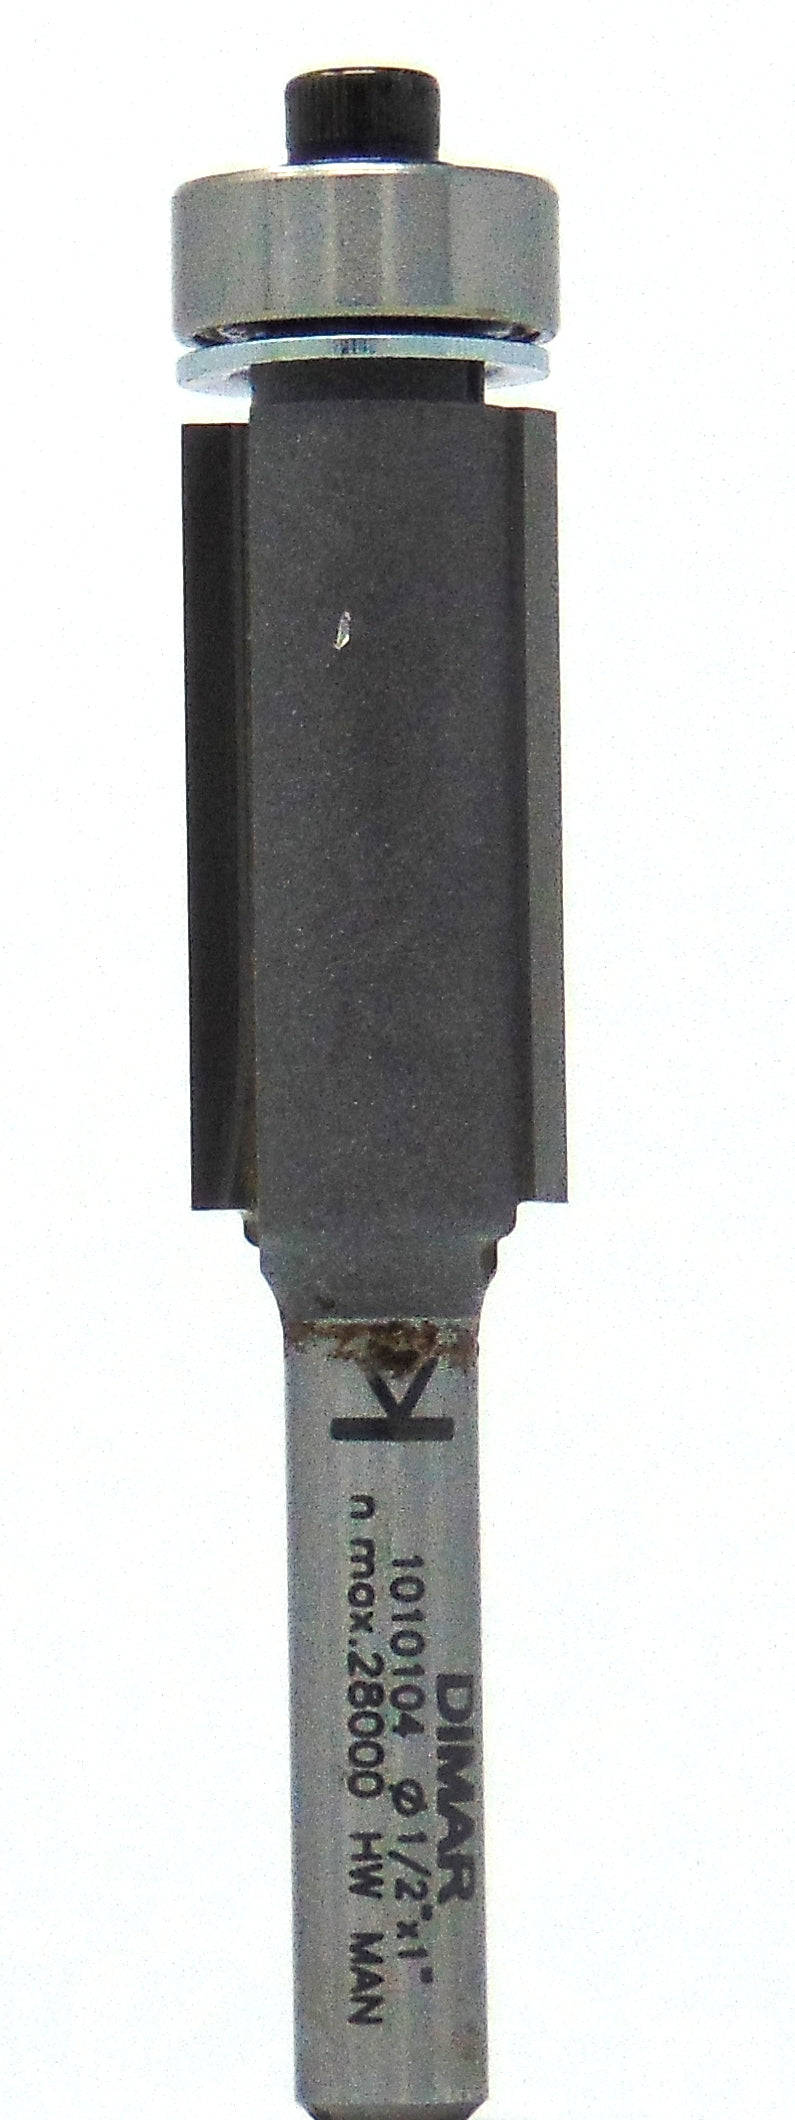 Bearing Guided Trimming Cutter - 12.7mm Diameter x 25mm Depth of Cut - 1/4" Shank